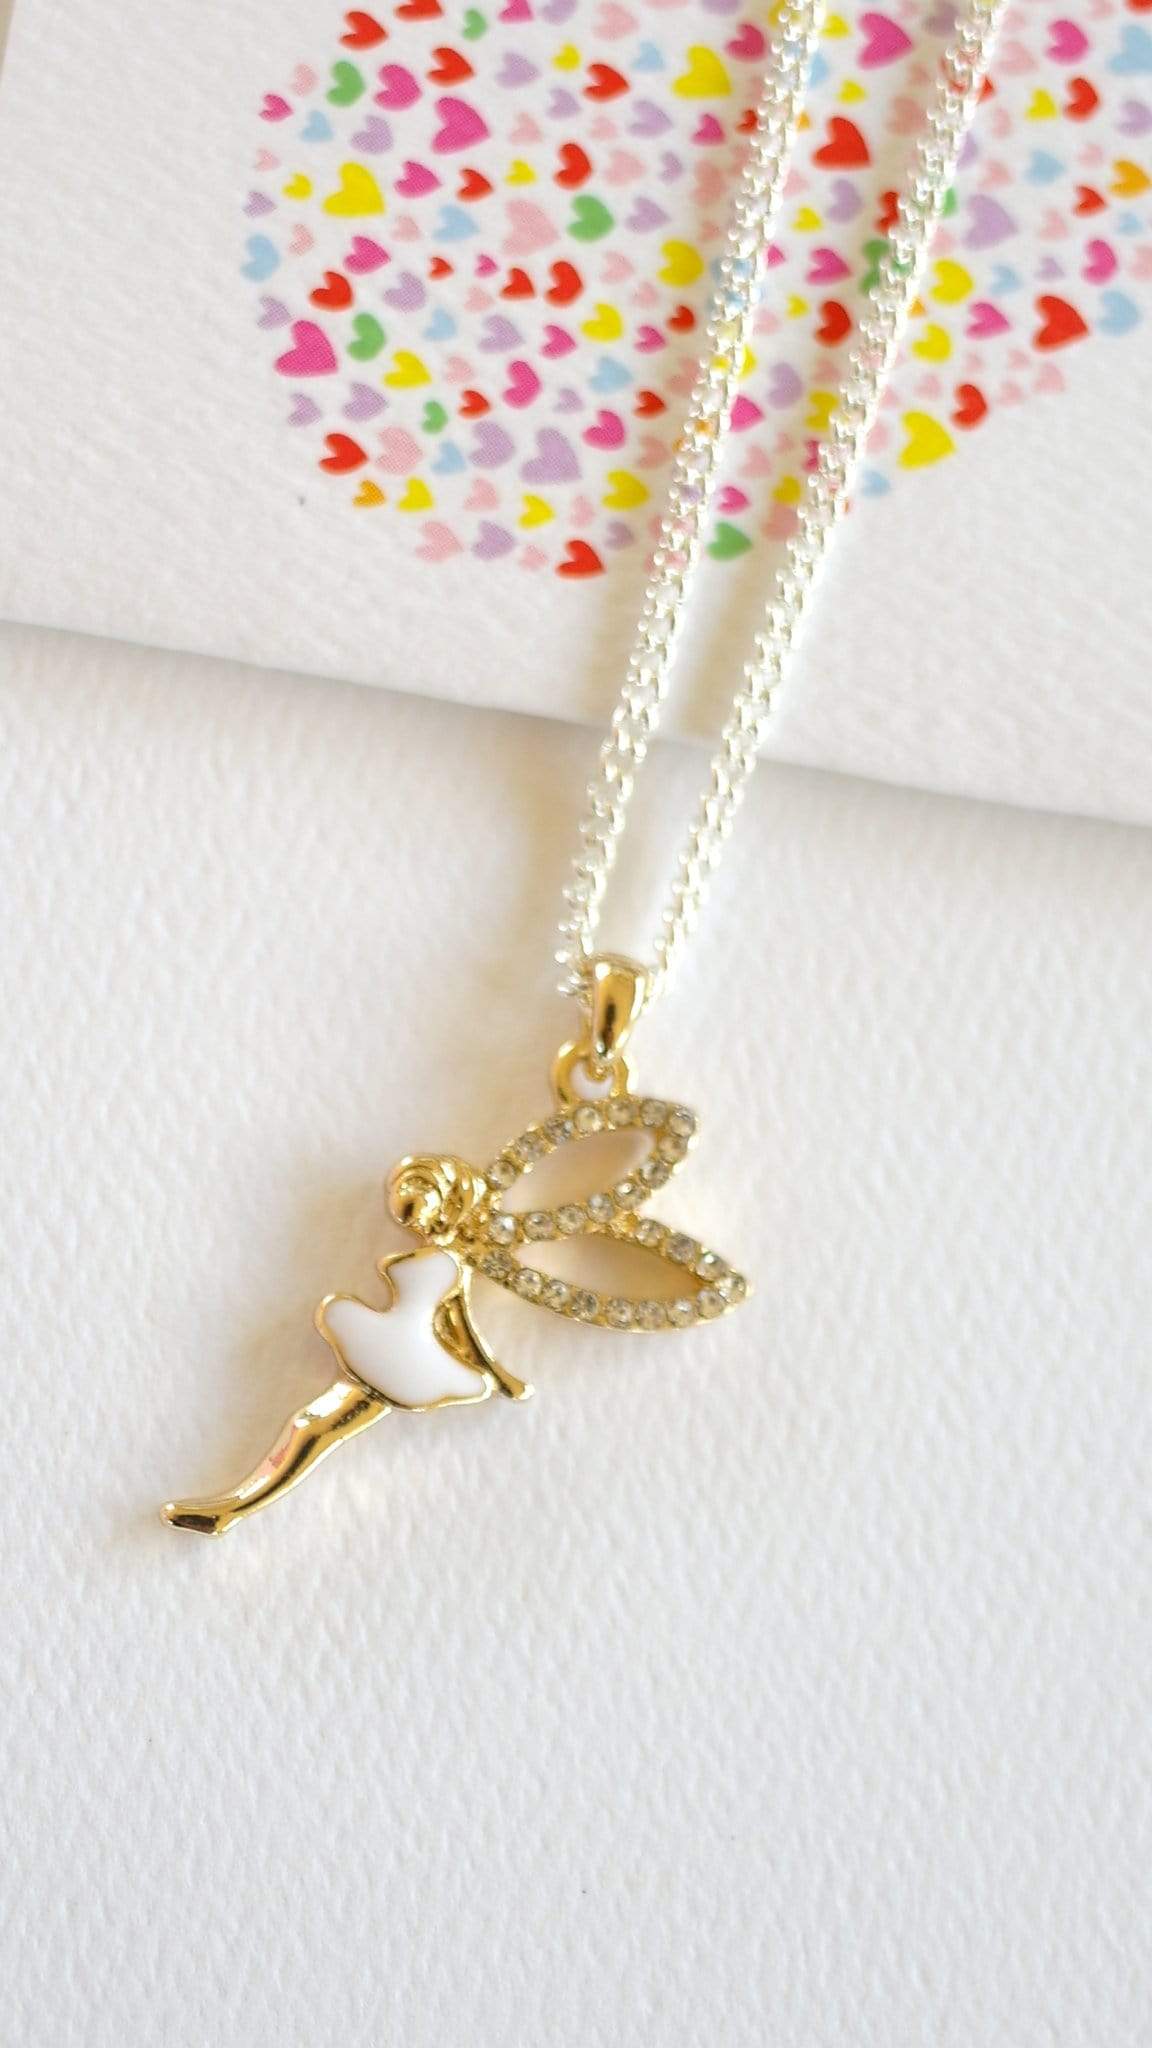 Lauren Hinkley Girls Accessory Fairy Necklace